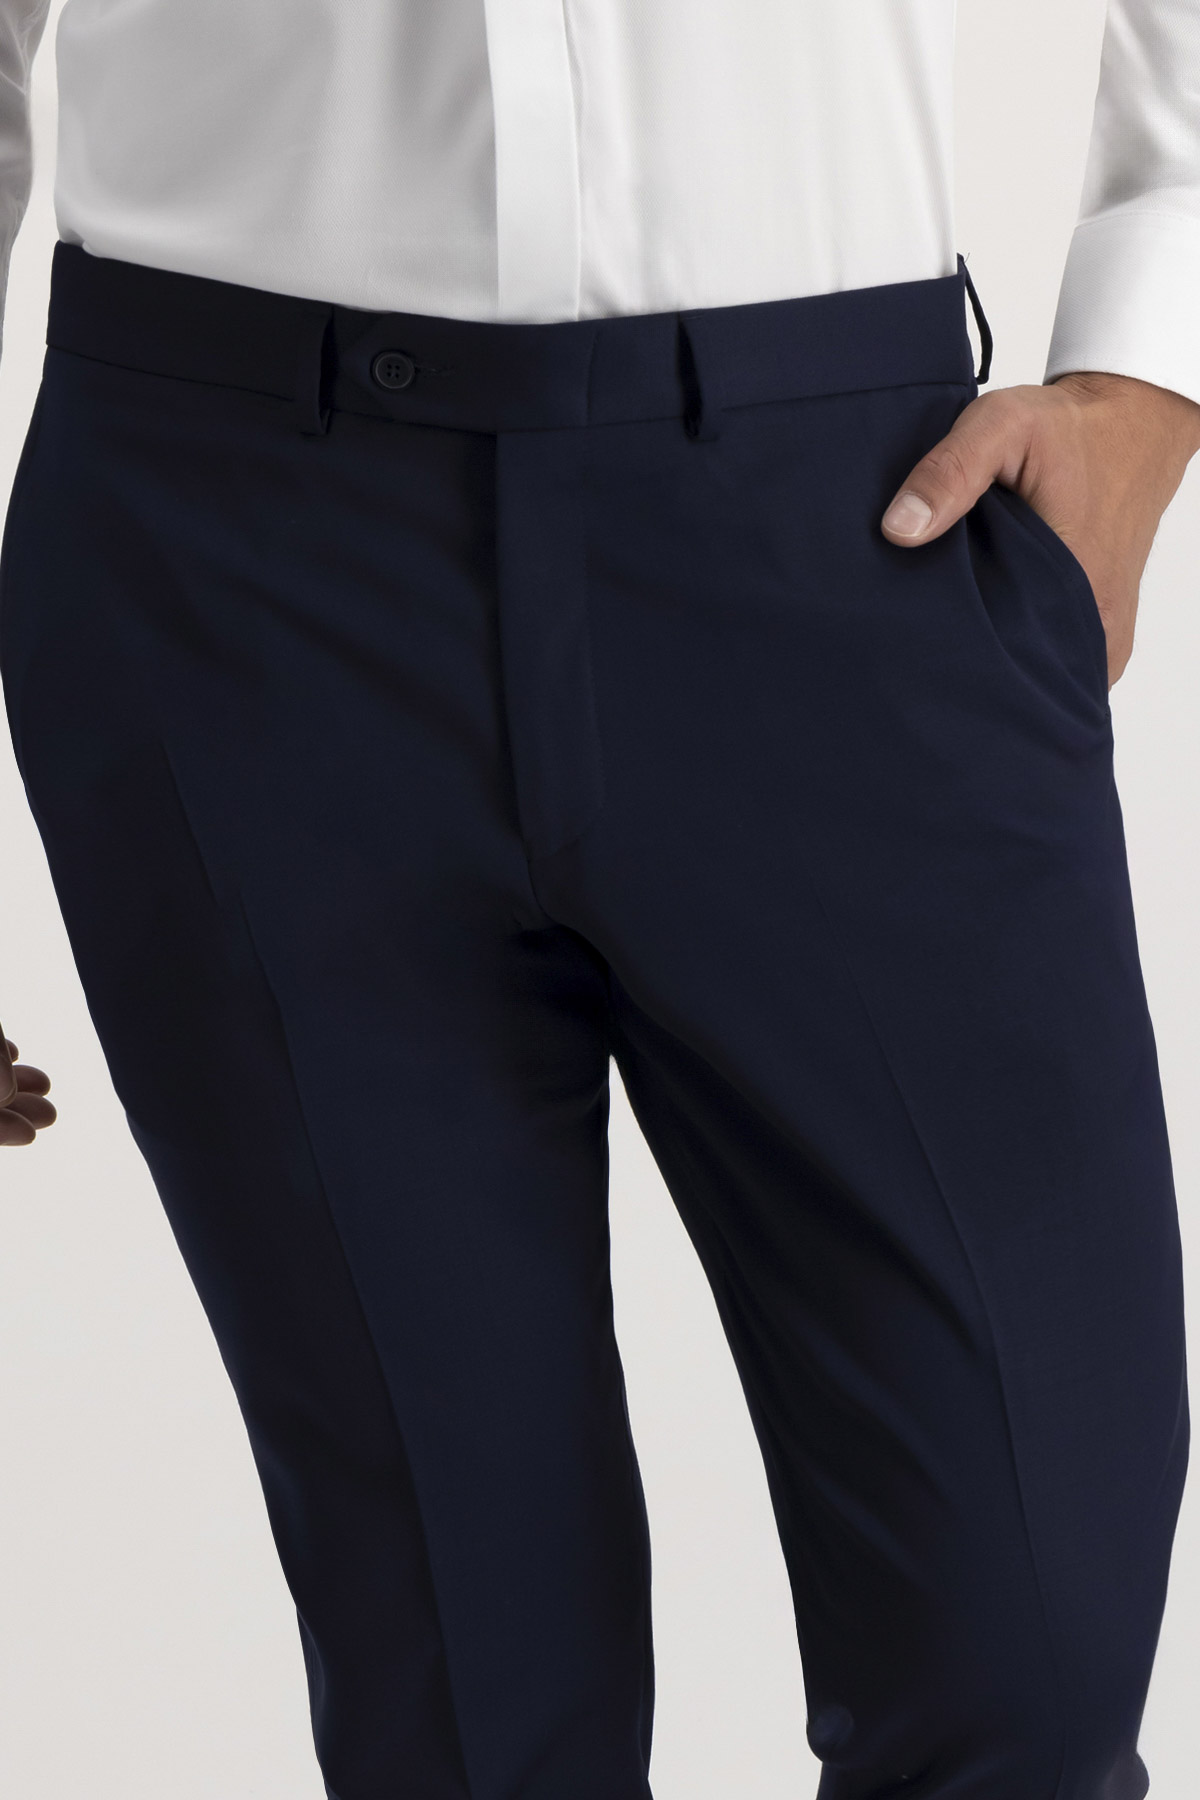 Pantalón Roberts Color azul marino Slim fit